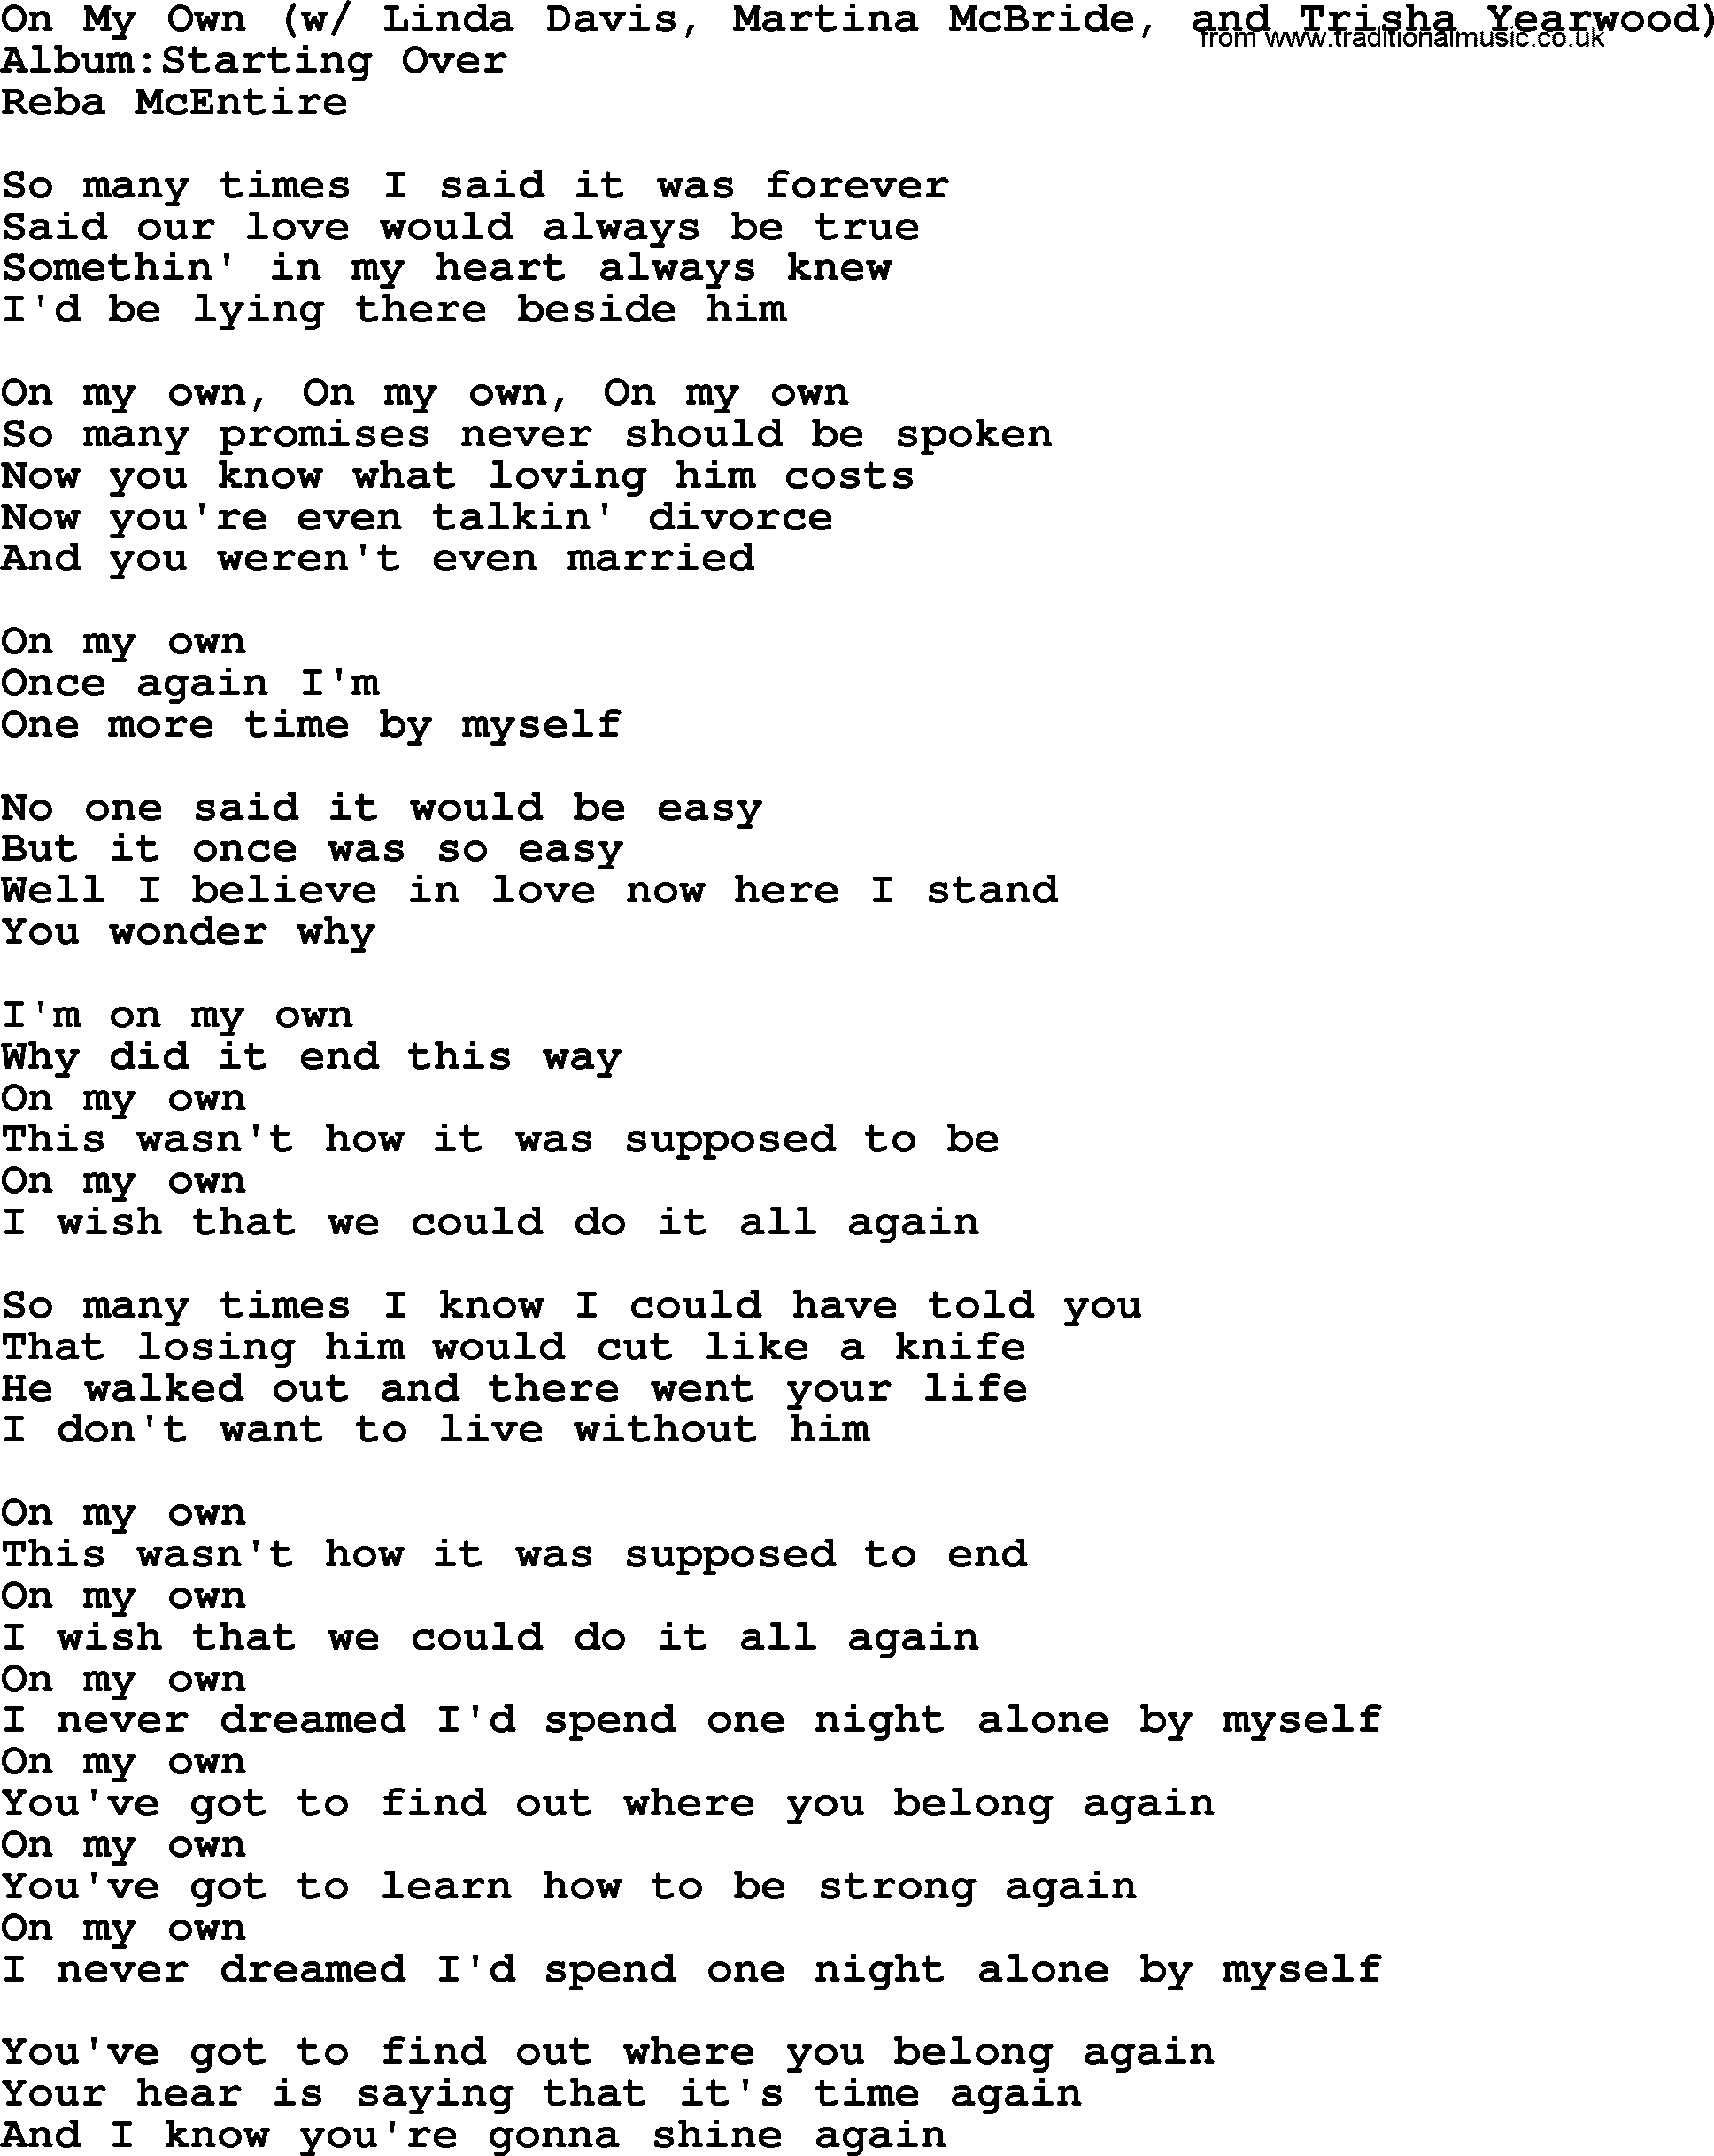 Reba McEntire song: On My Own lyrics